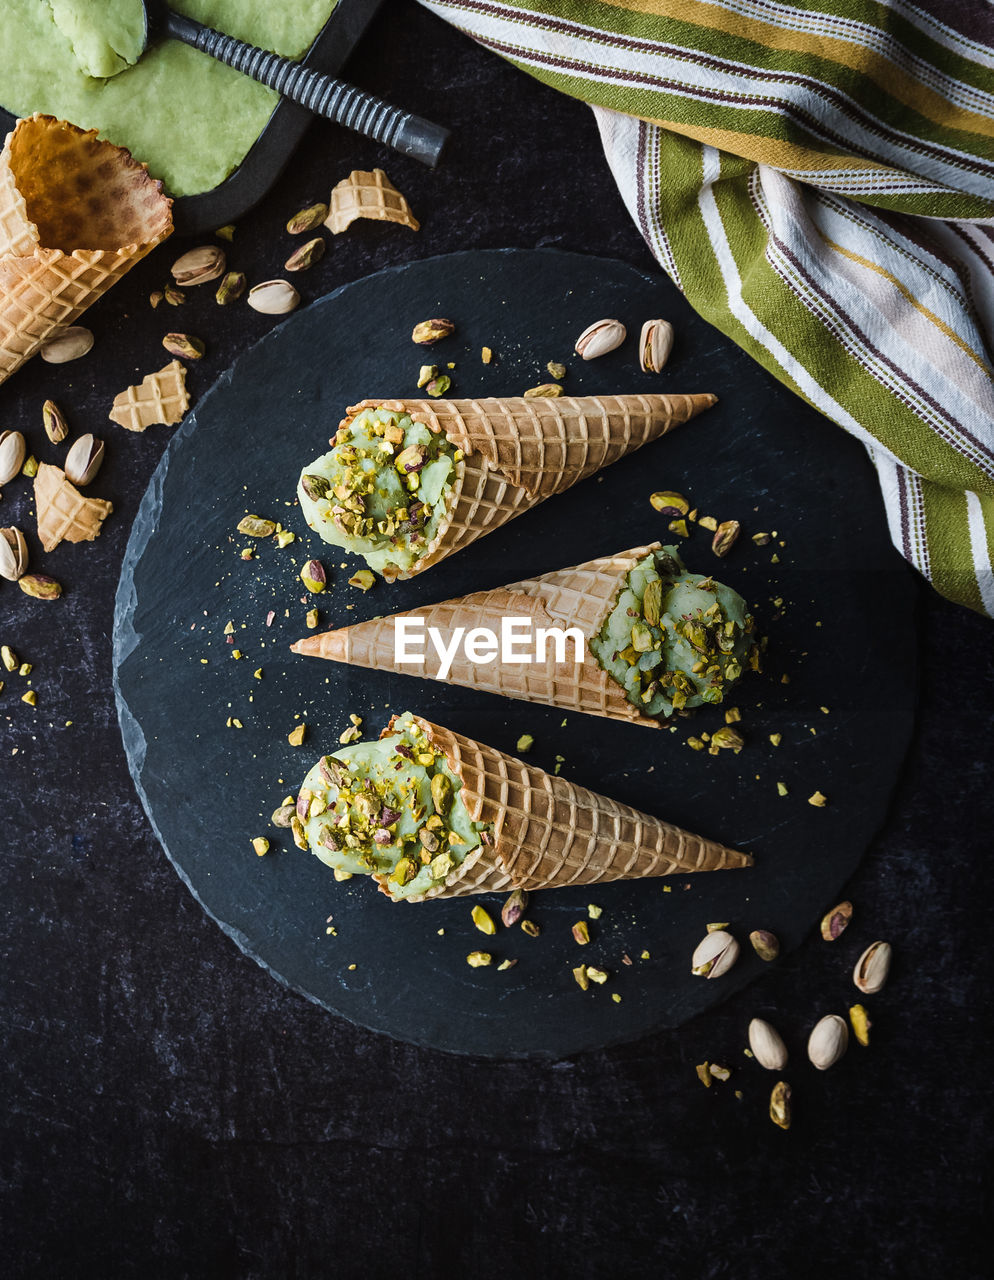 Overhead view of pistachio ice cream in cones on black background.